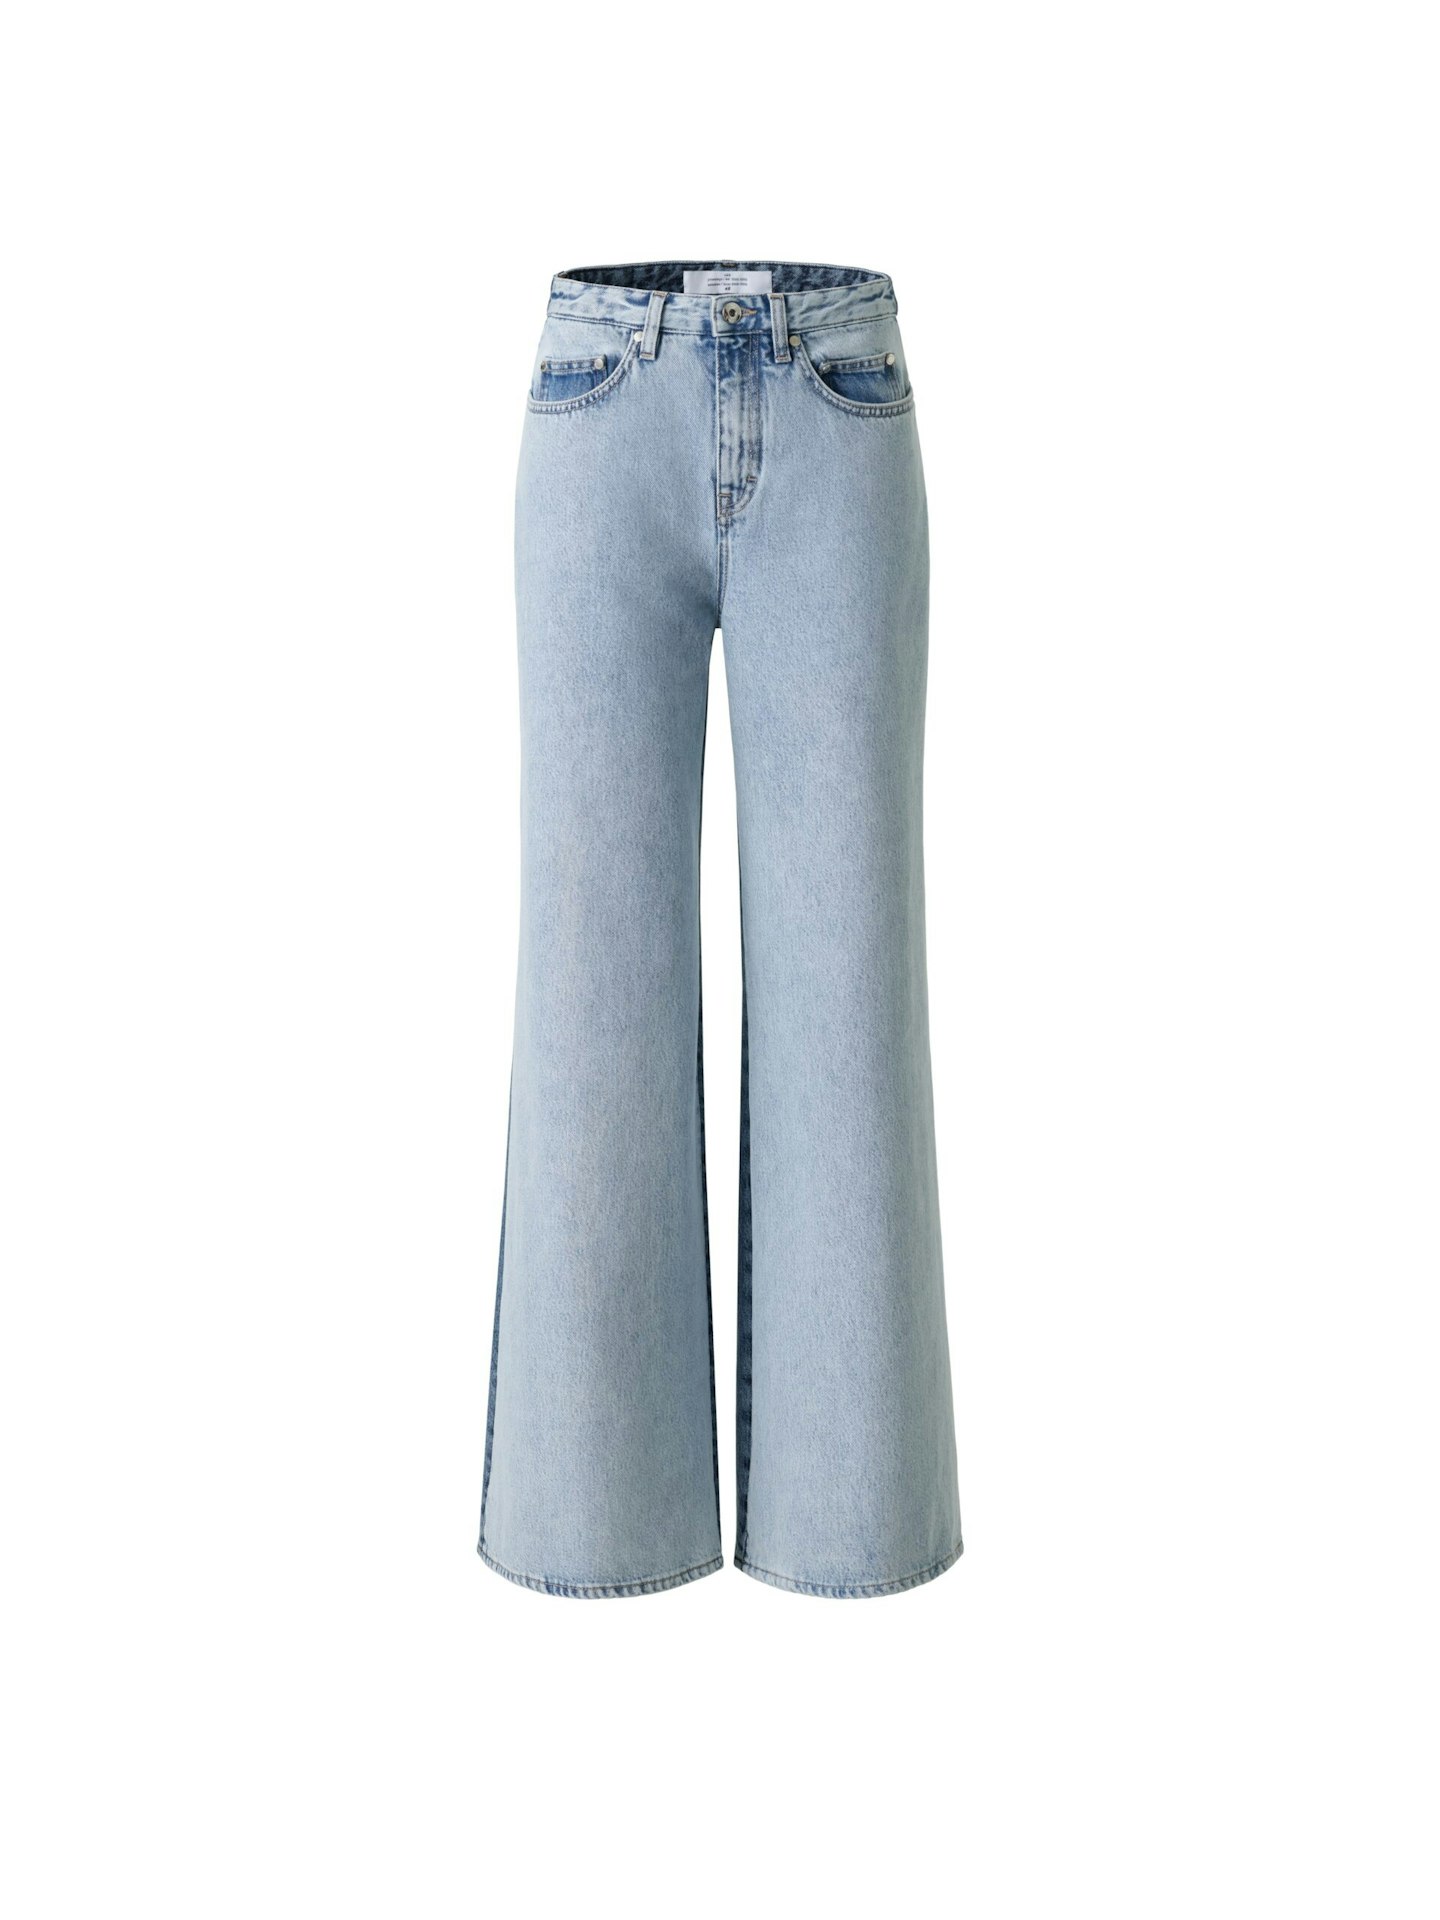 rokh h&m jeans 